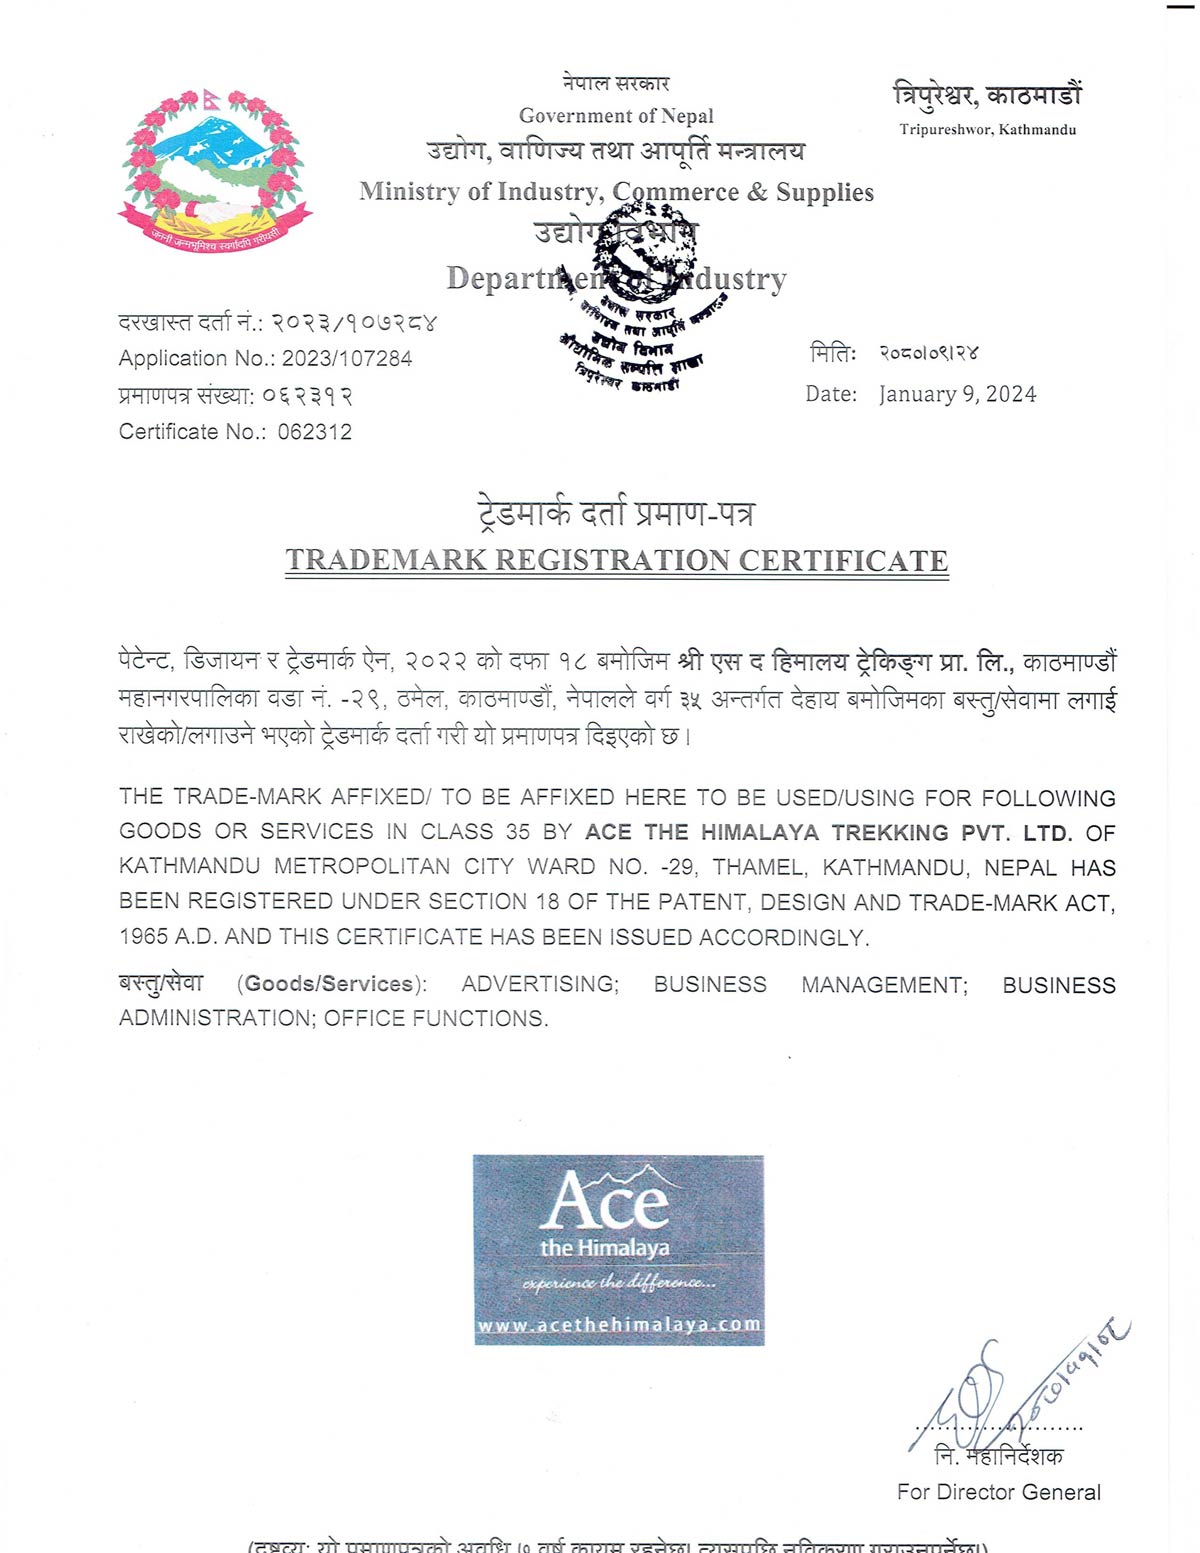 Ace the Himalaya Trademark